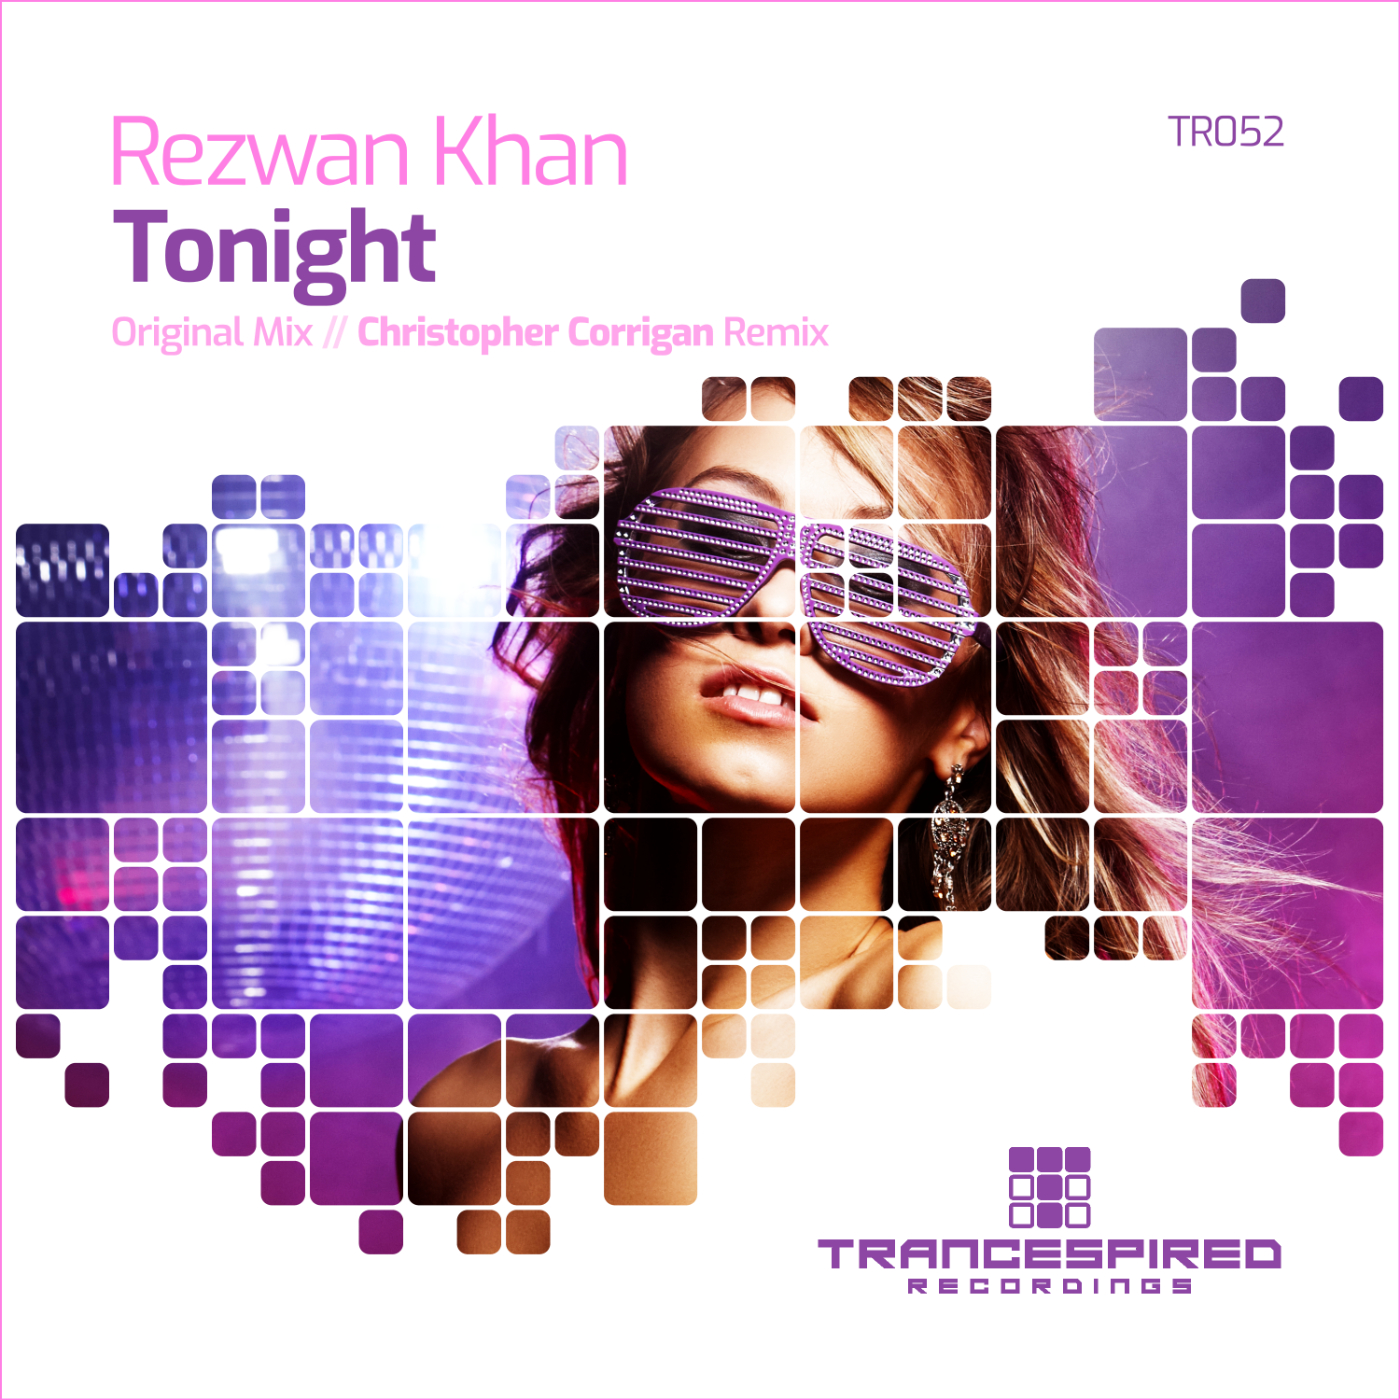 Rezwan Khan presents Tonight on Trancespired Recordings